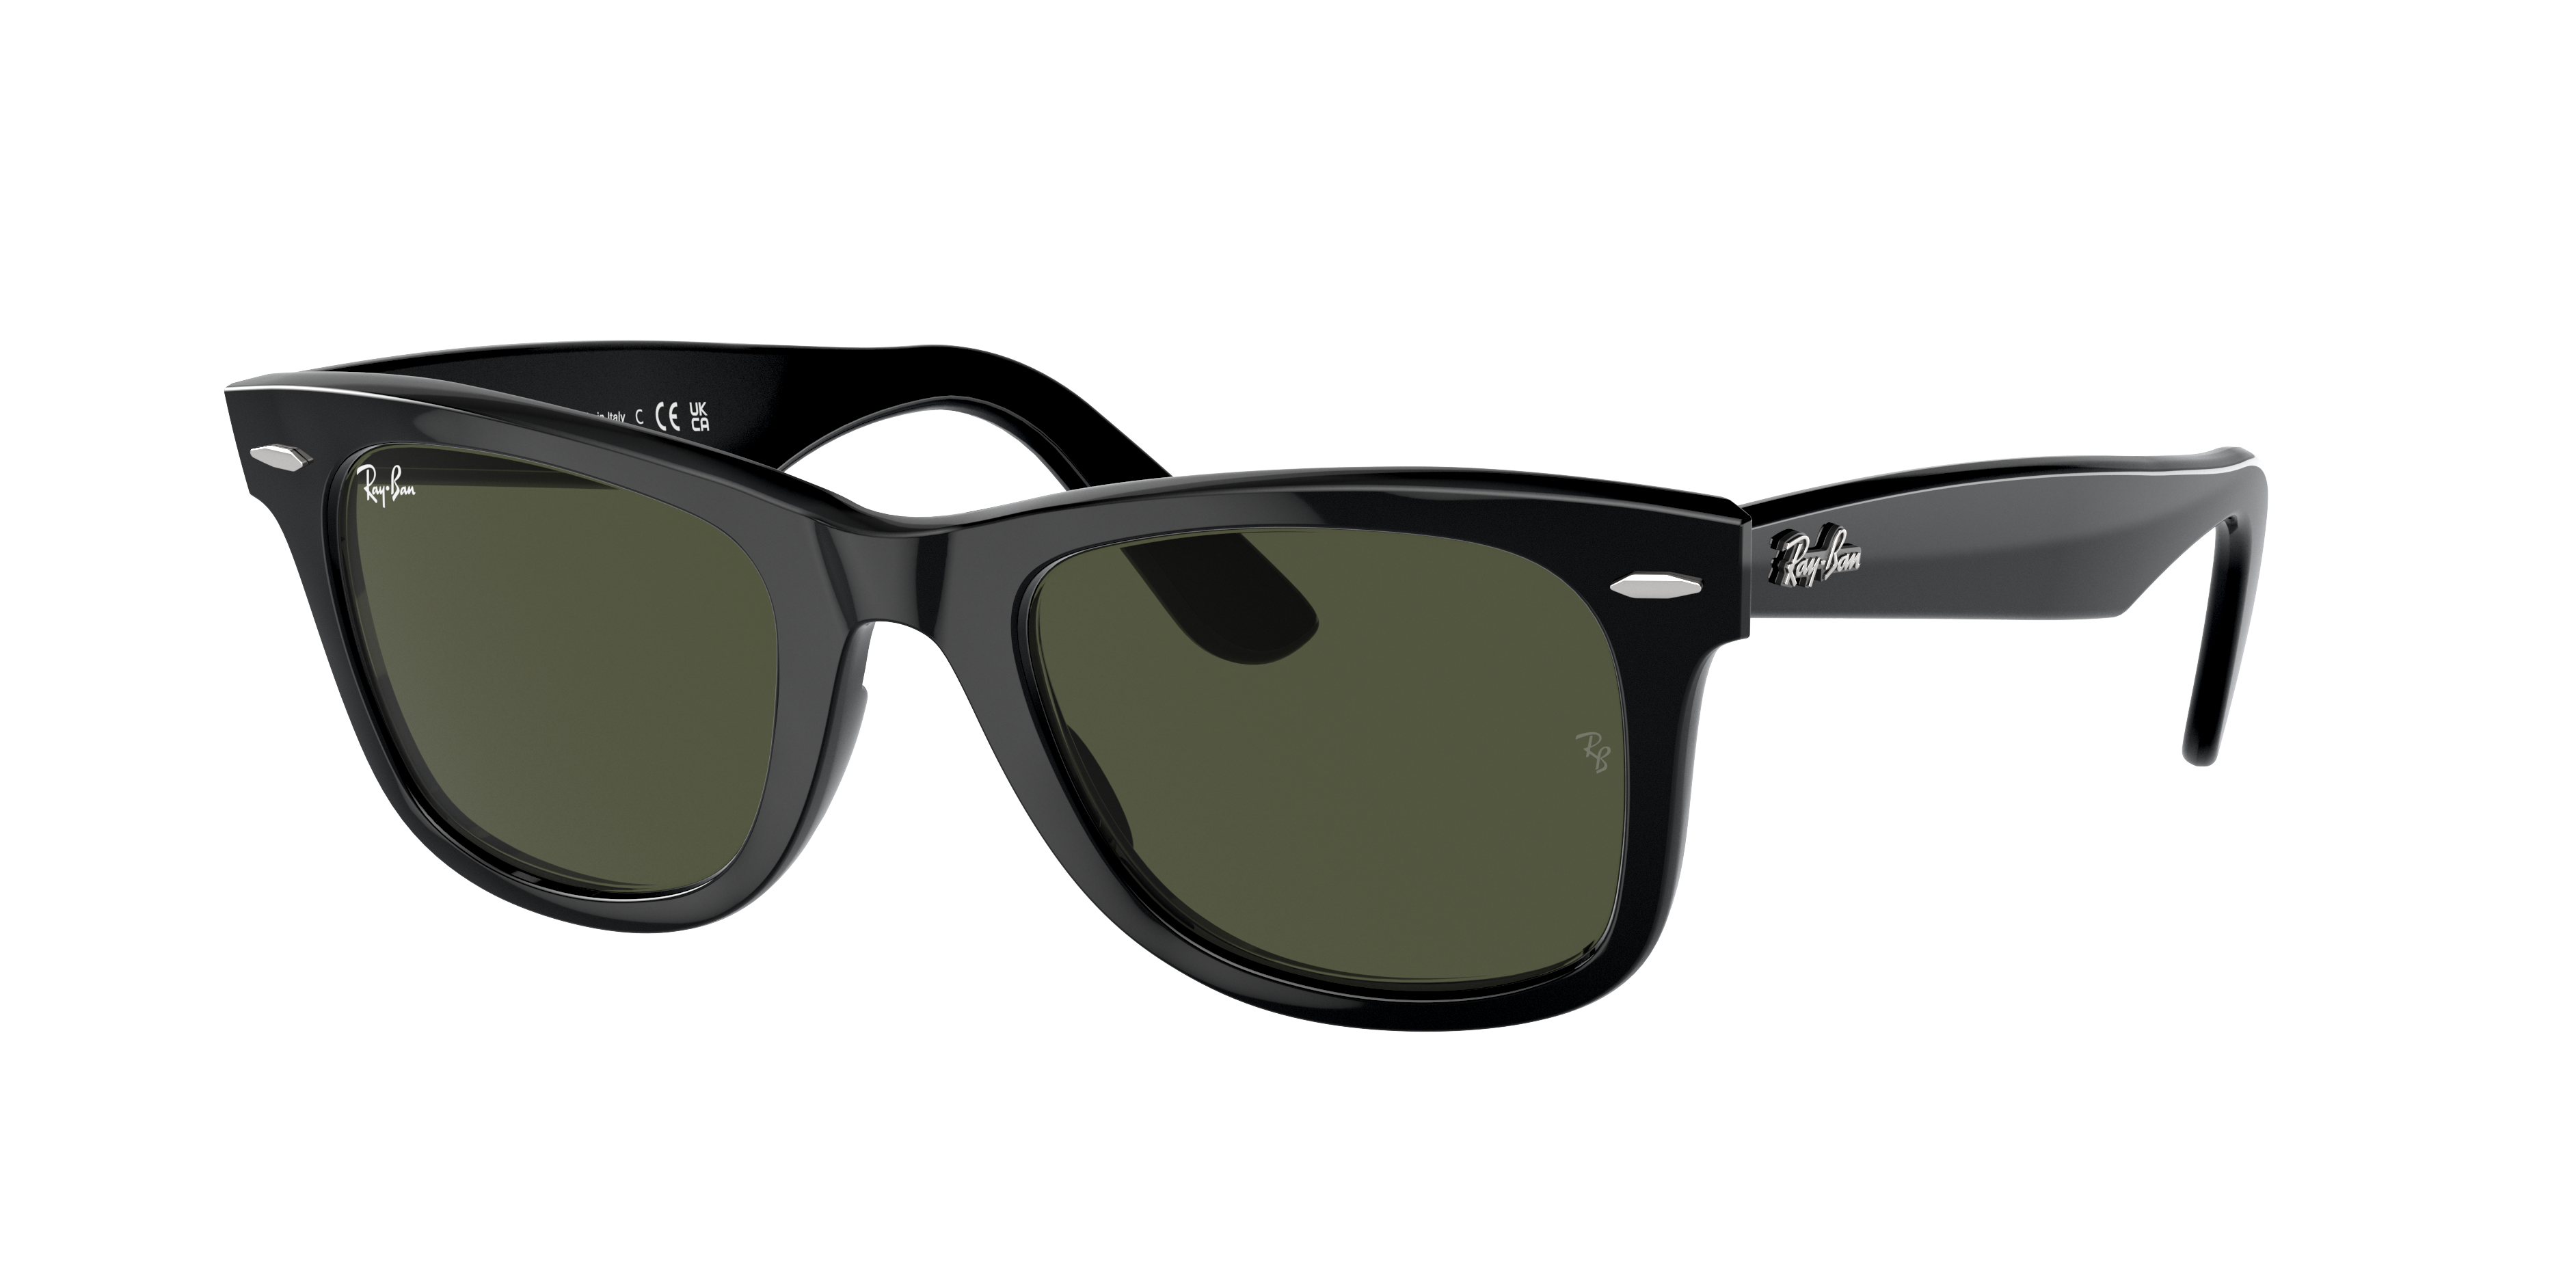 MEN Sunglasses Wayfare Style Black Frame Classic Super Dark Lens NEW 